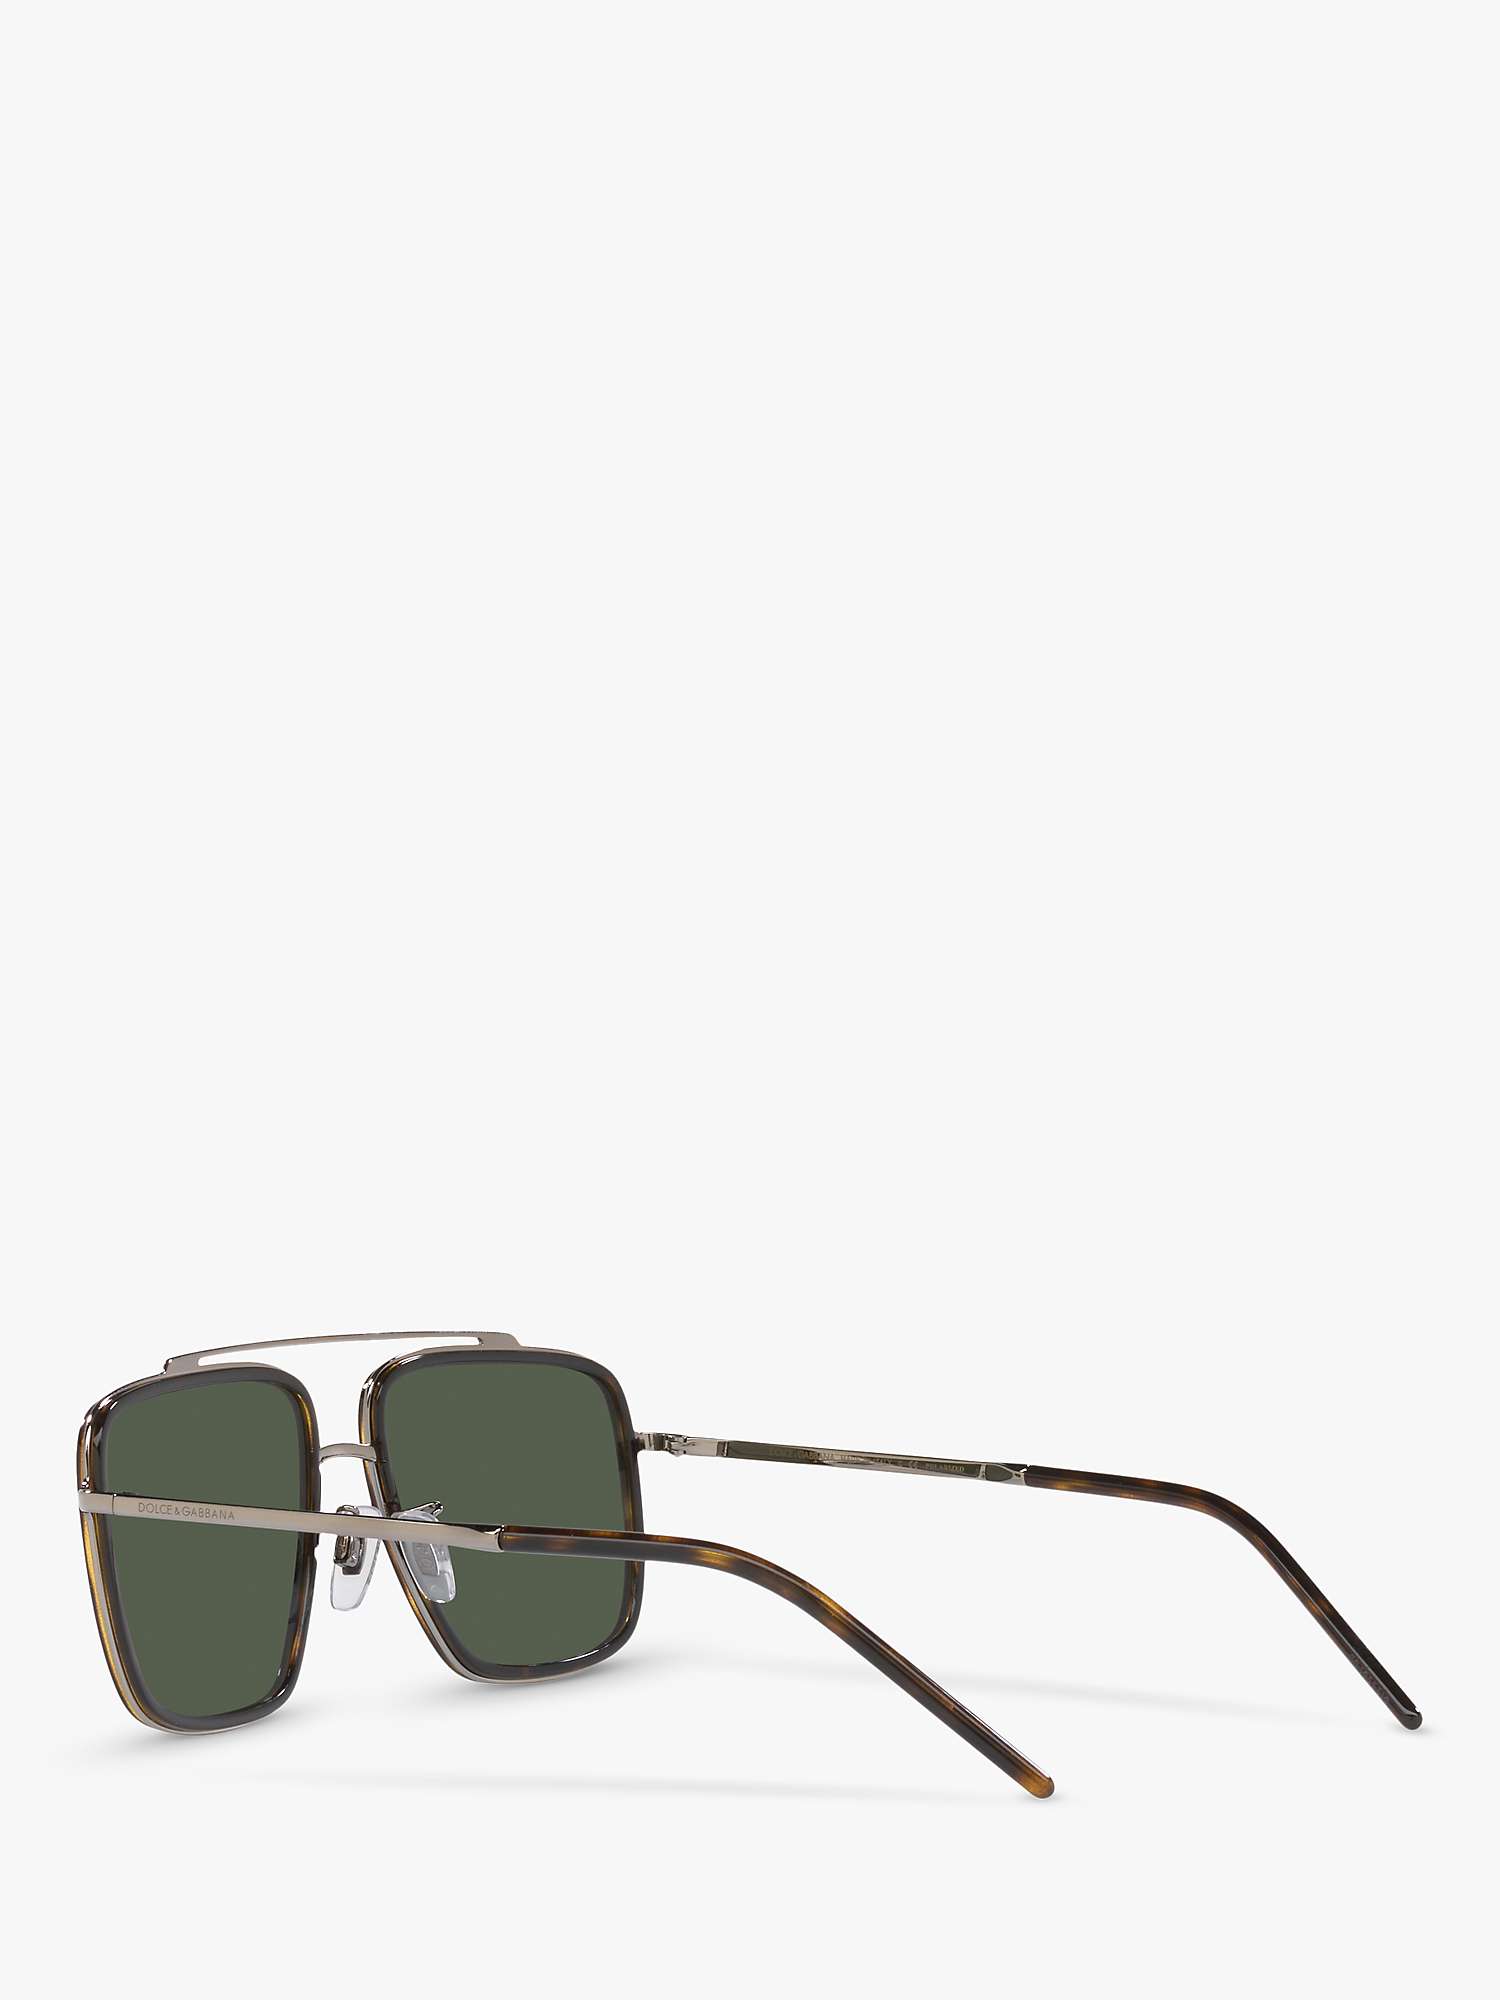 Buy Dolce & Gabbana DG2220 Men's Polarised Square Sunglasses, Bronze/Green Online at johnlewis.com